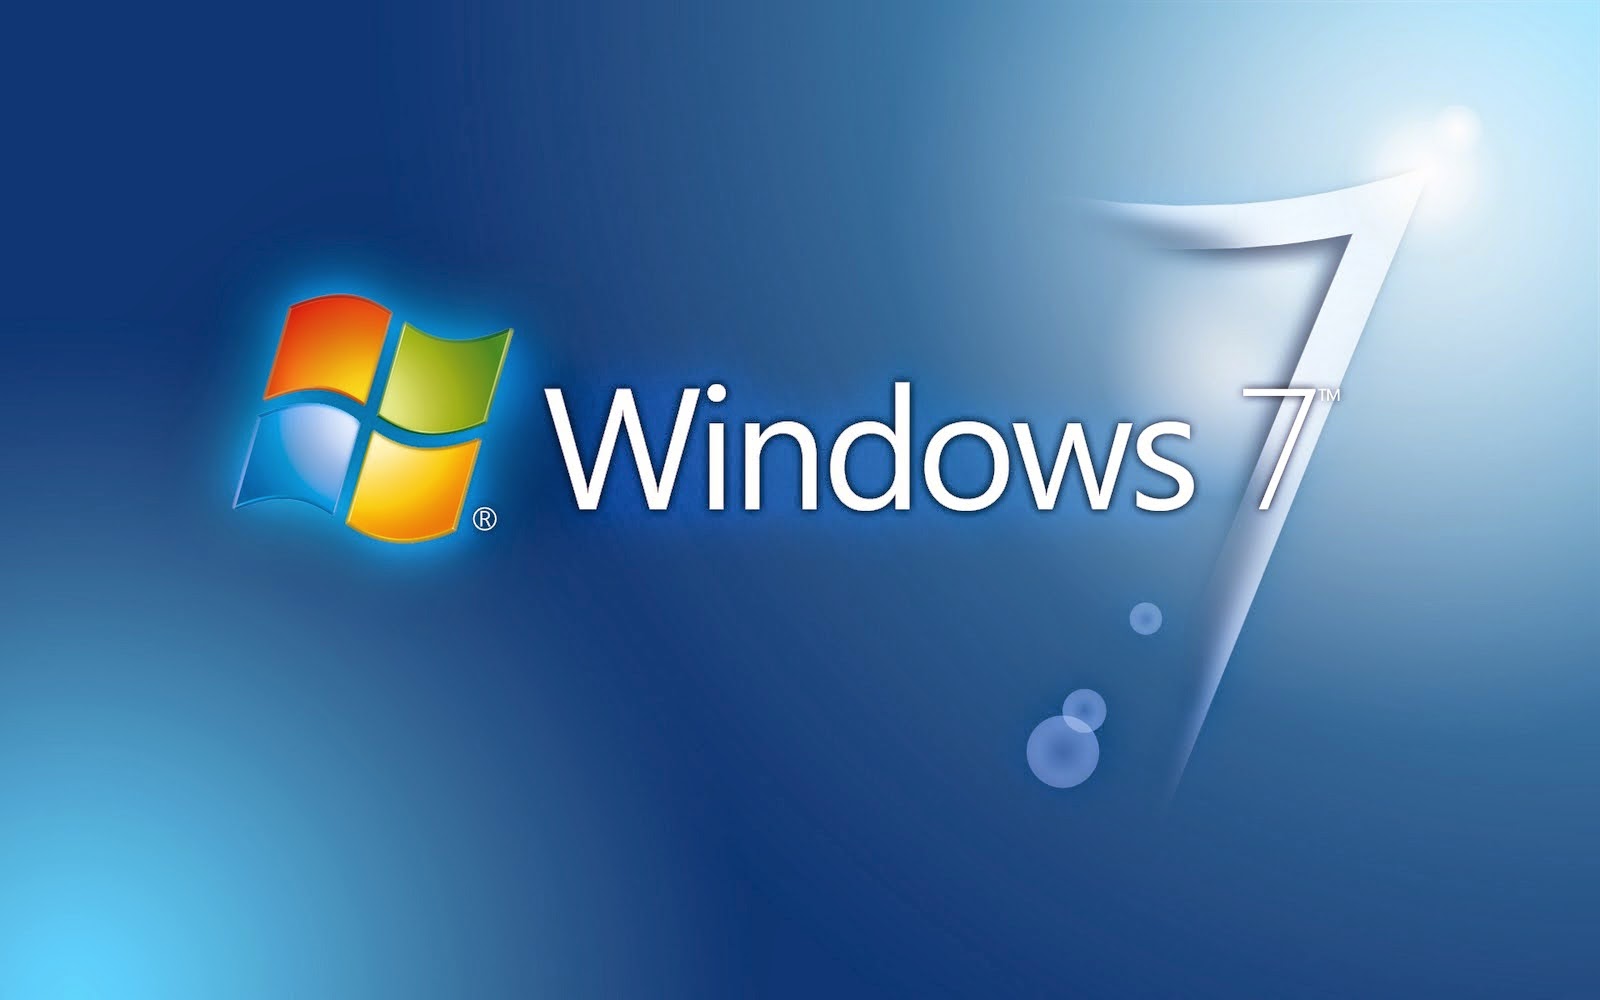 Windows 7 home premium activation key free